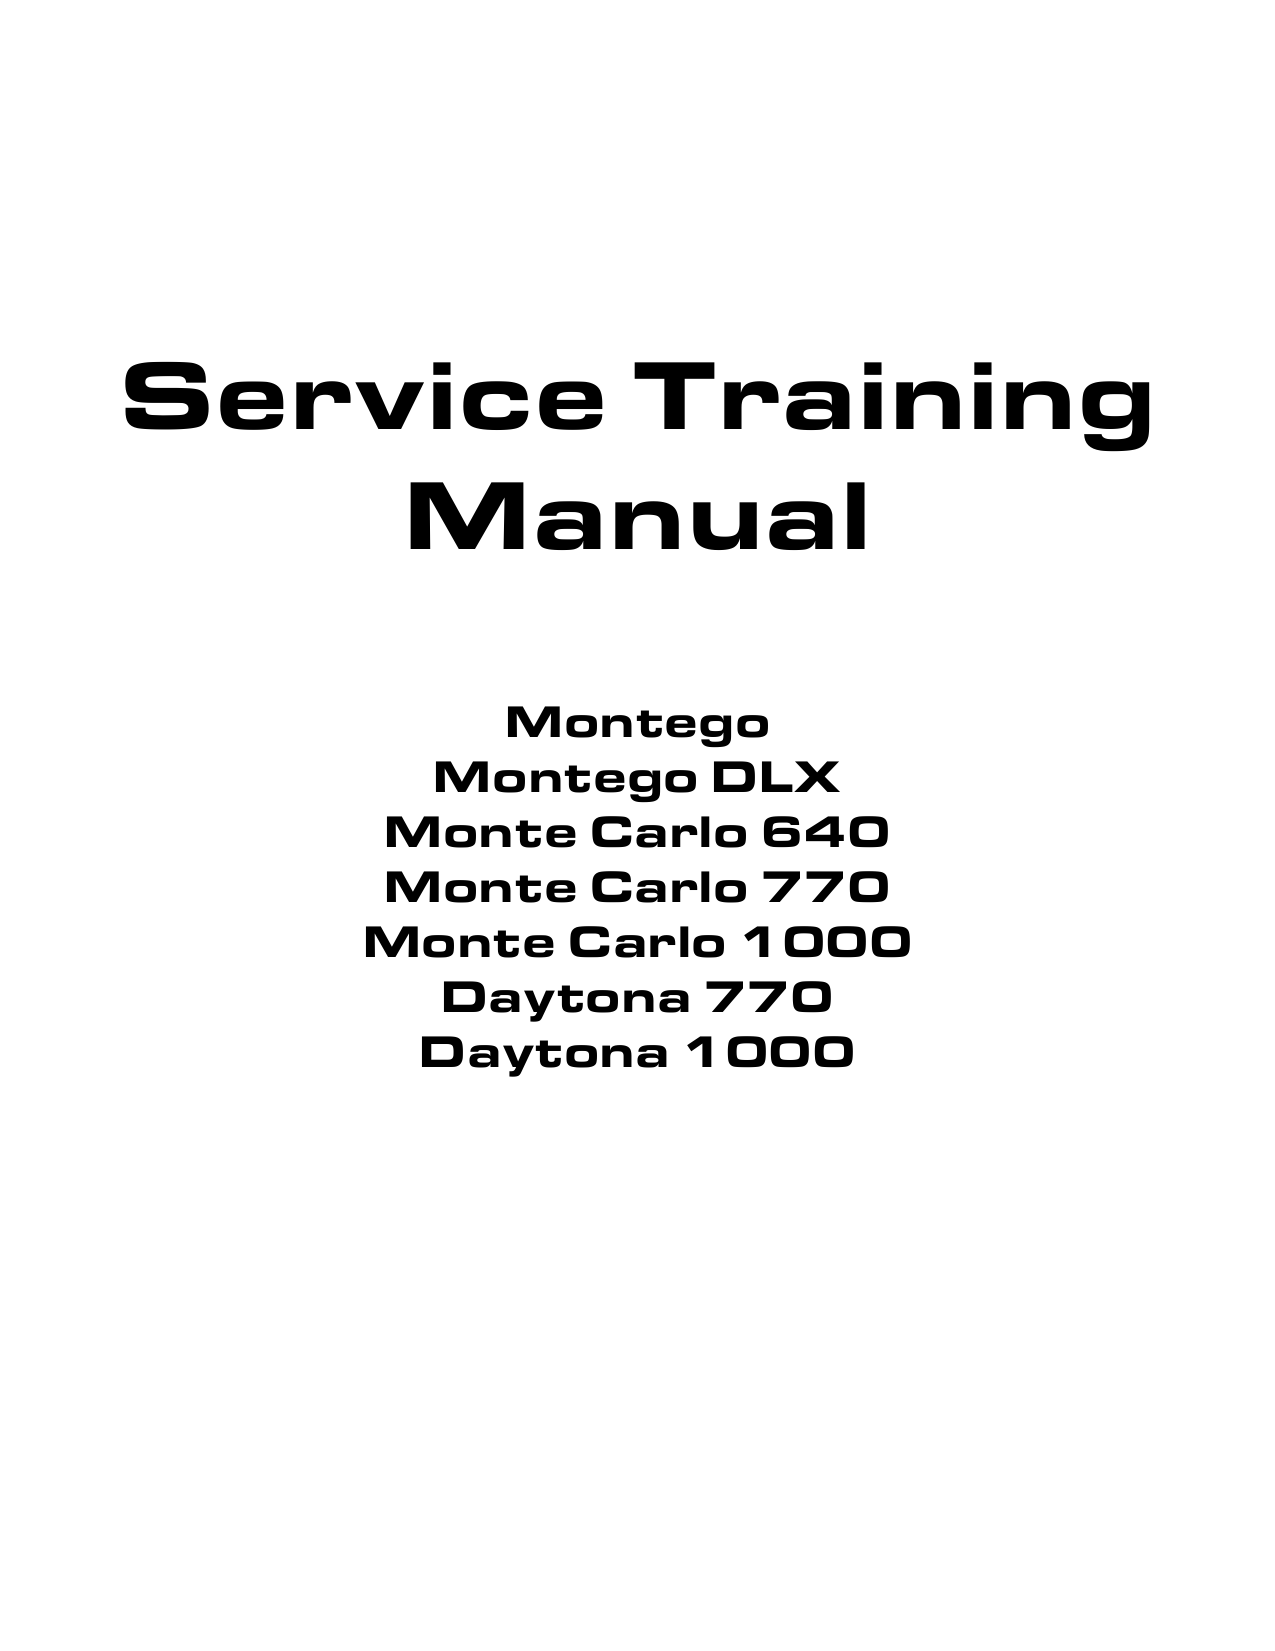 1997 Arctic Cat Tigershark service training manual Preview image 2